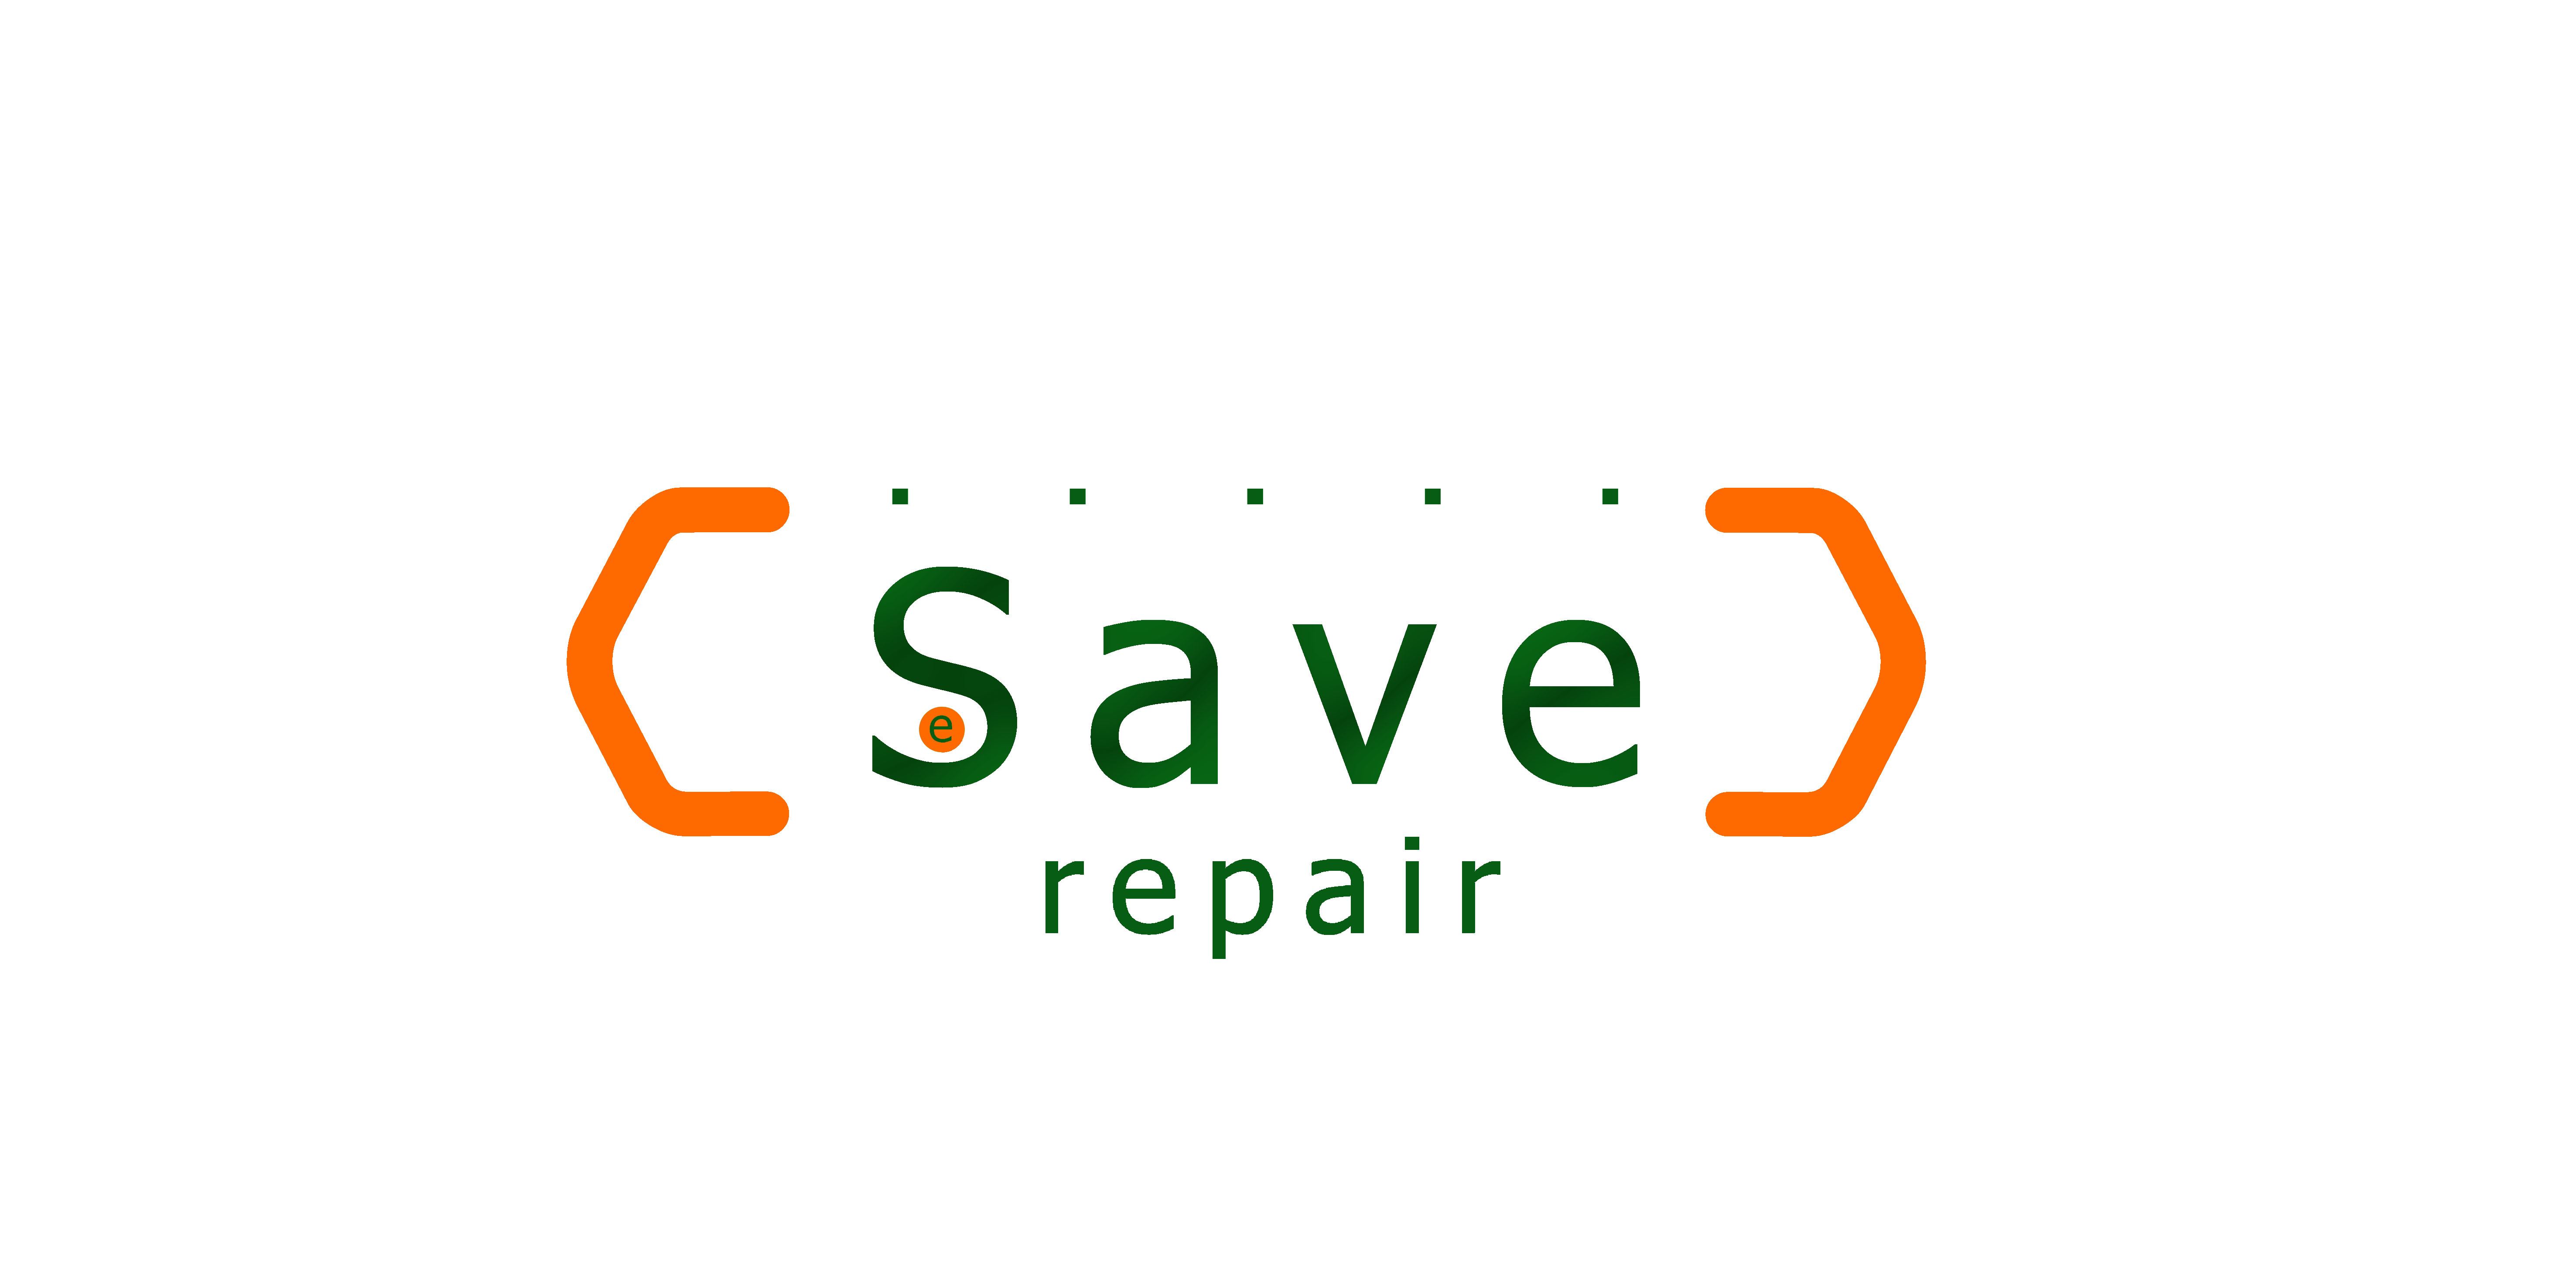 r43737_44_esave_repair_logo-last-larg.jpg